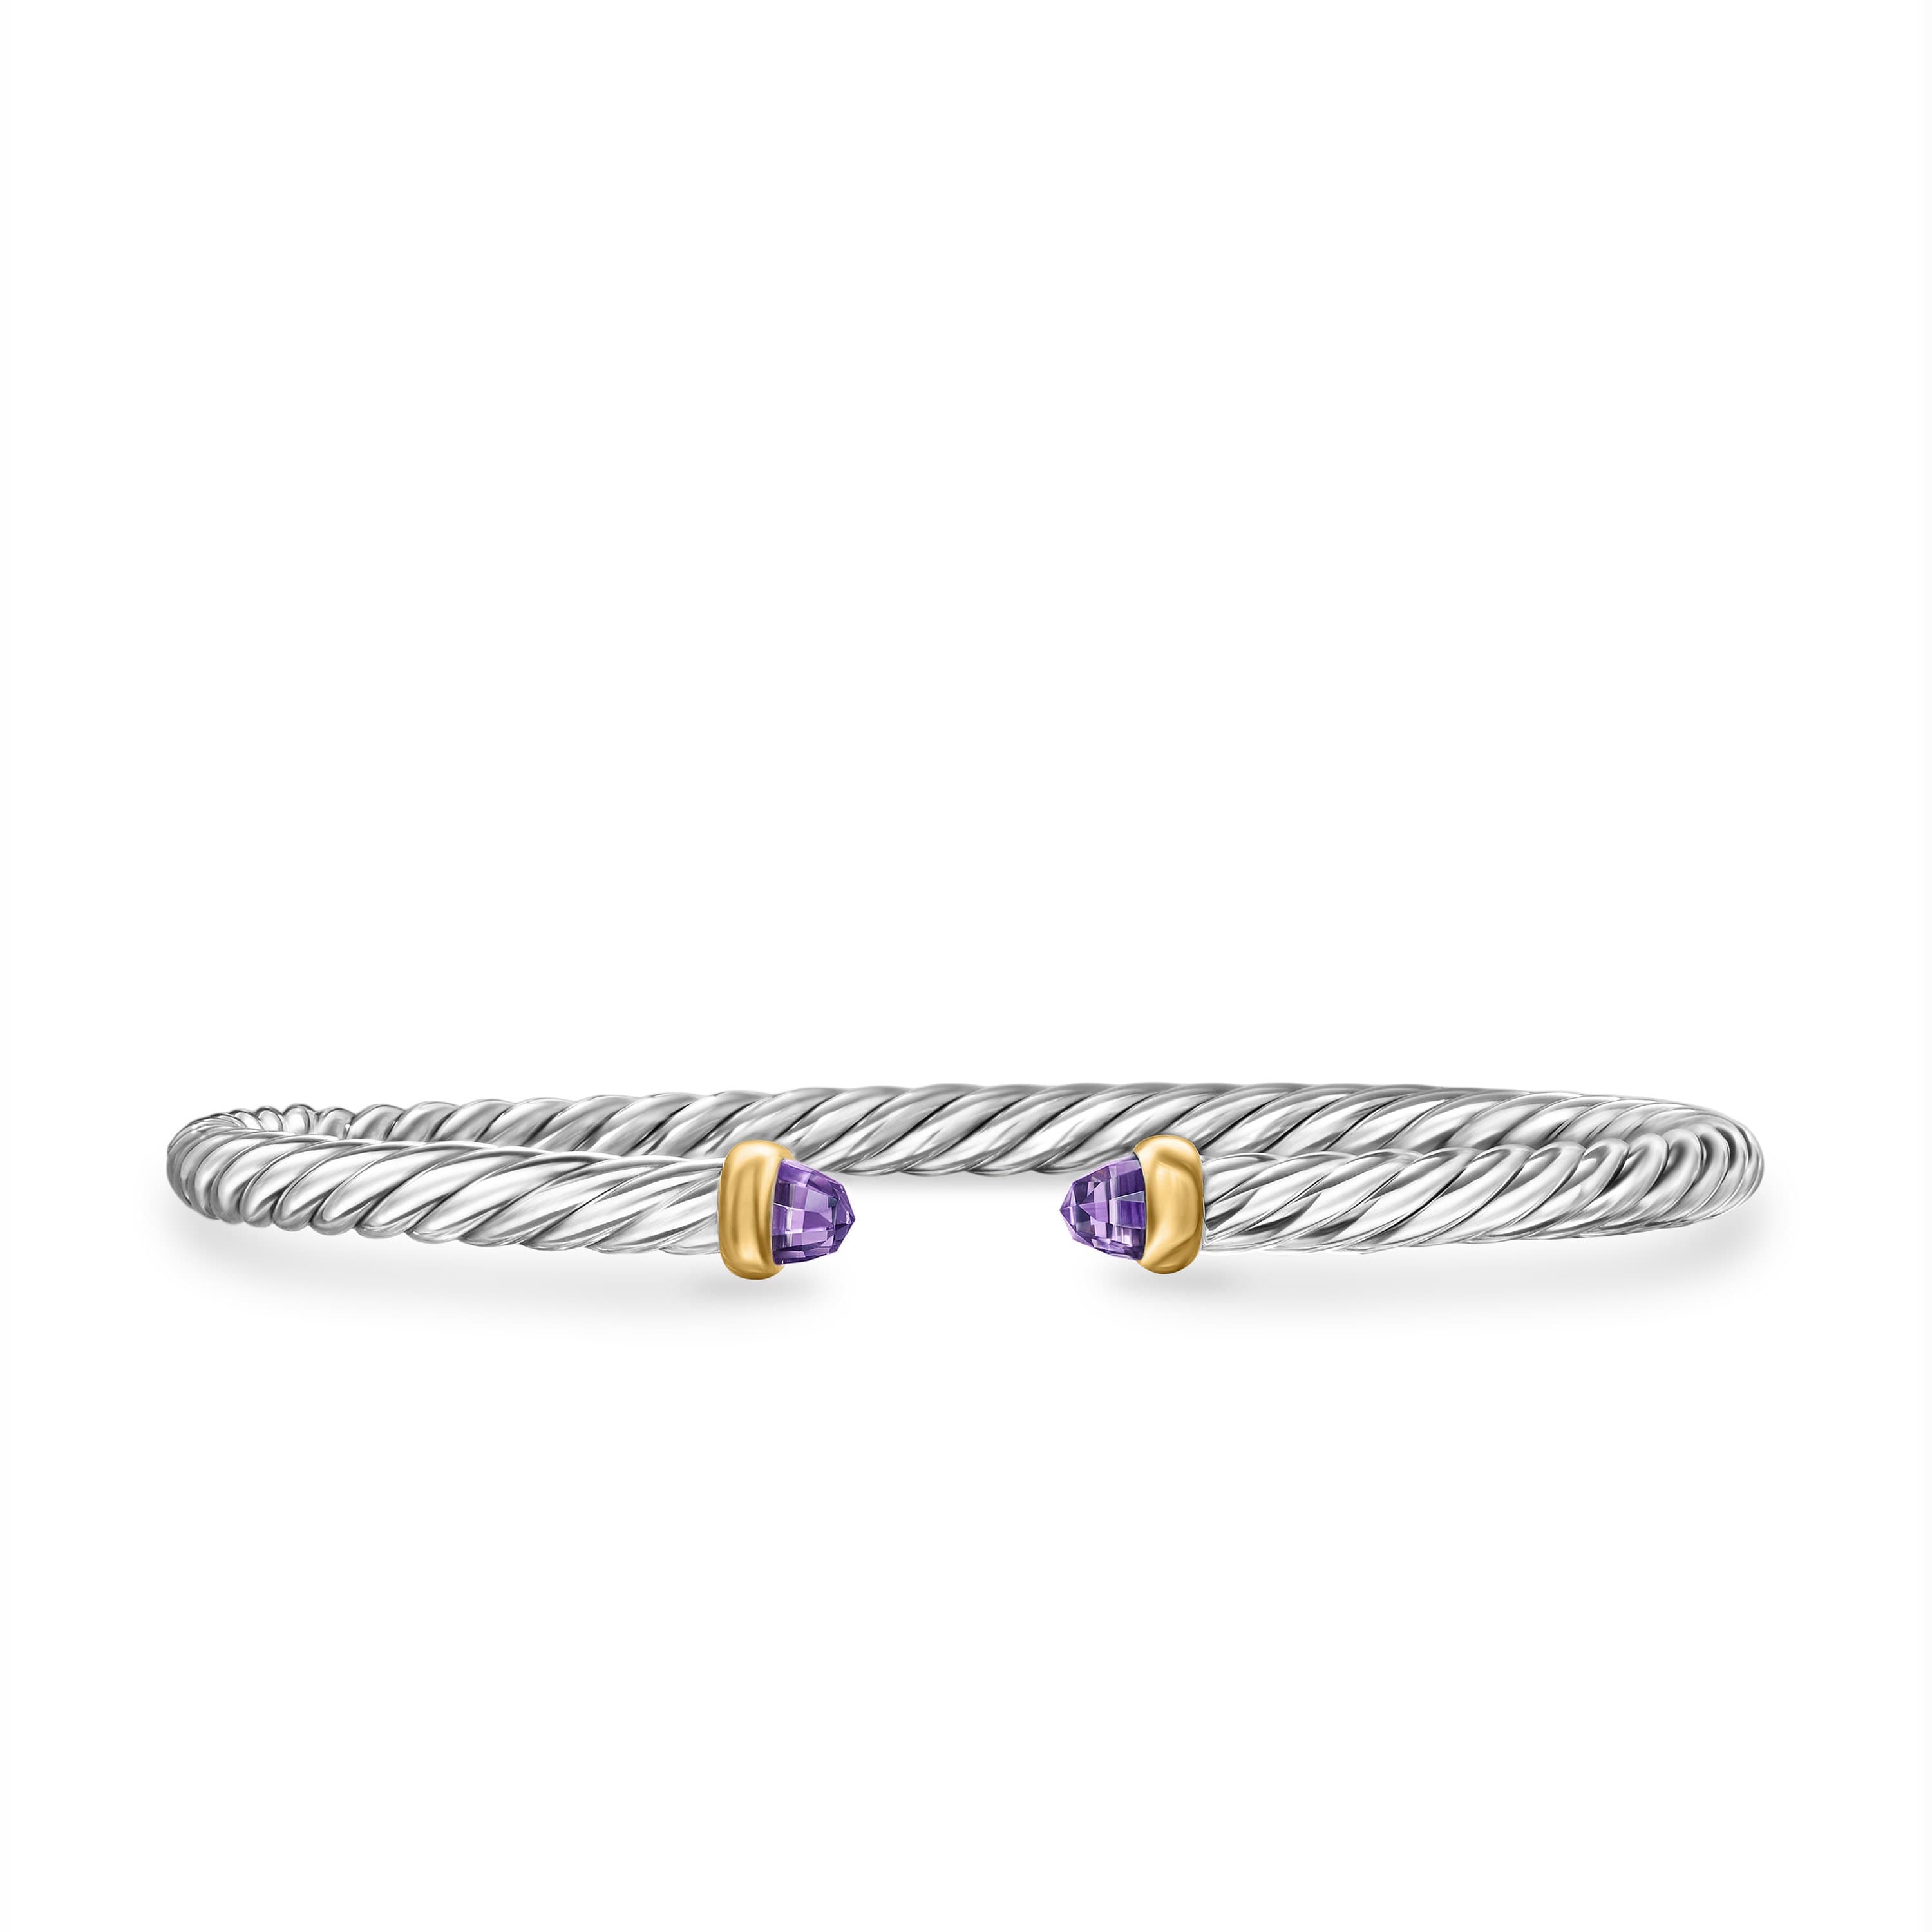  David Yurman Cable Flex Sterling Silver Bracelet with Amethyst, Size Medium